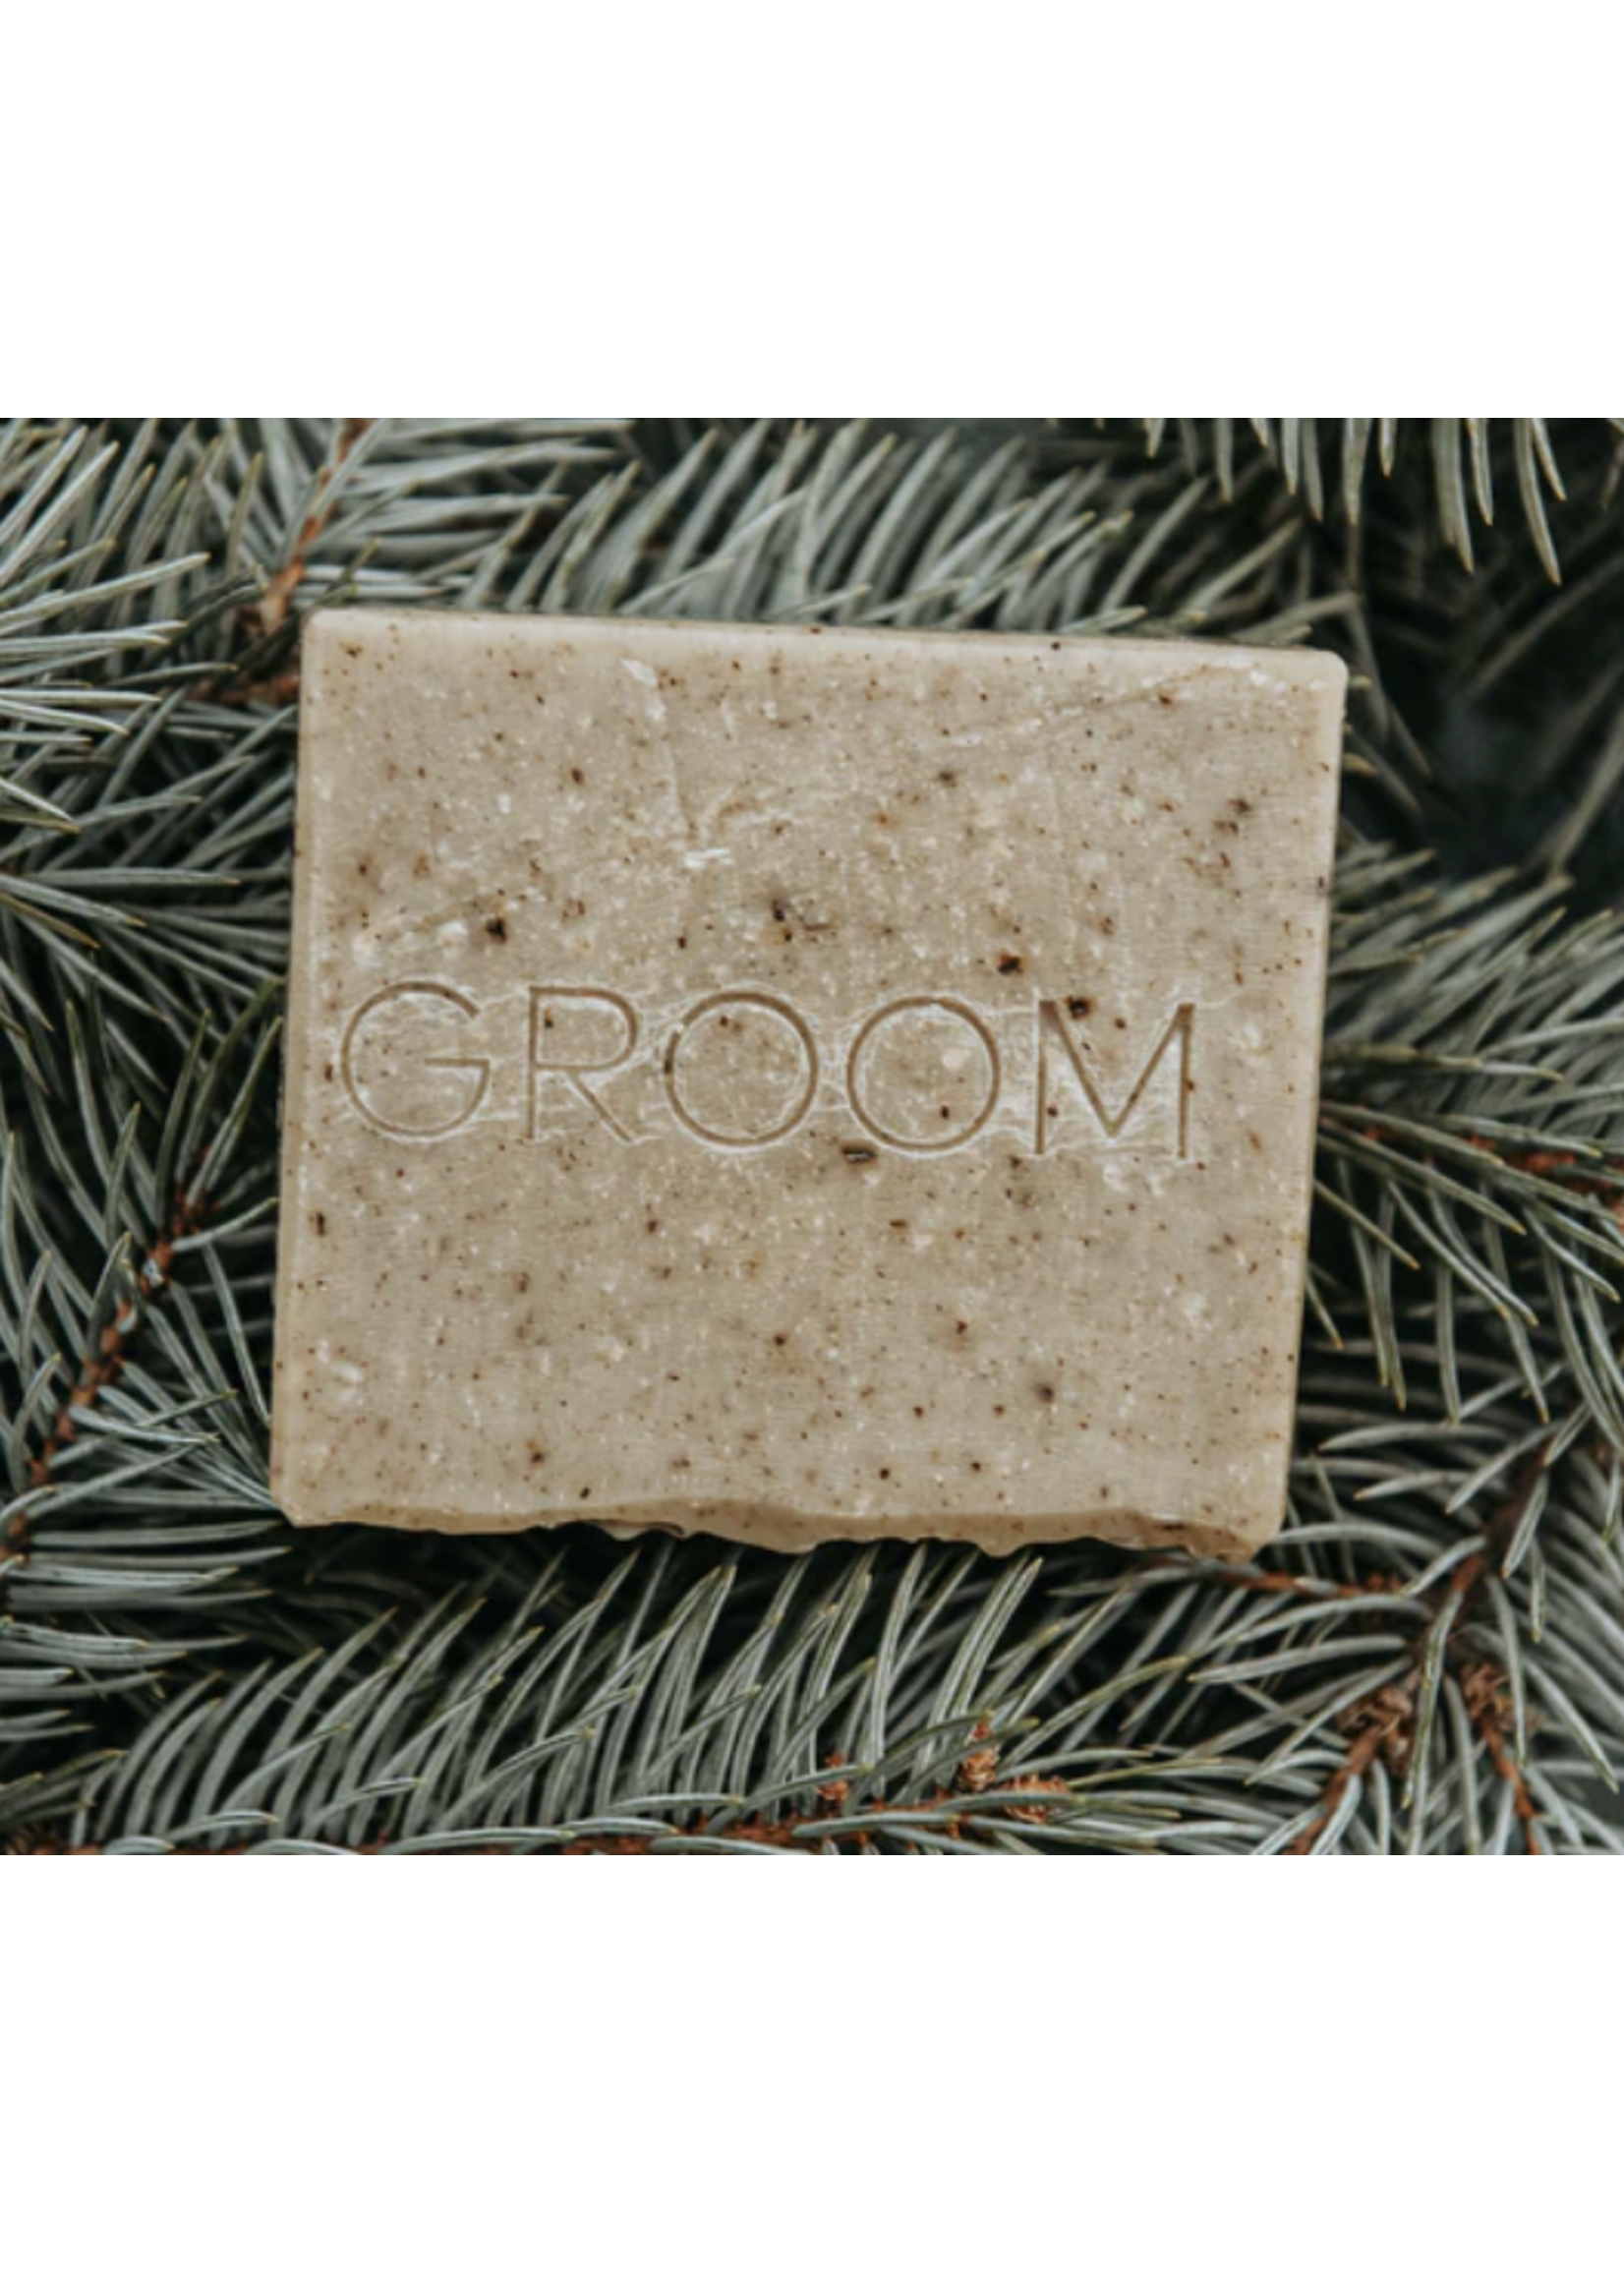 Groom Groom Foret Soap